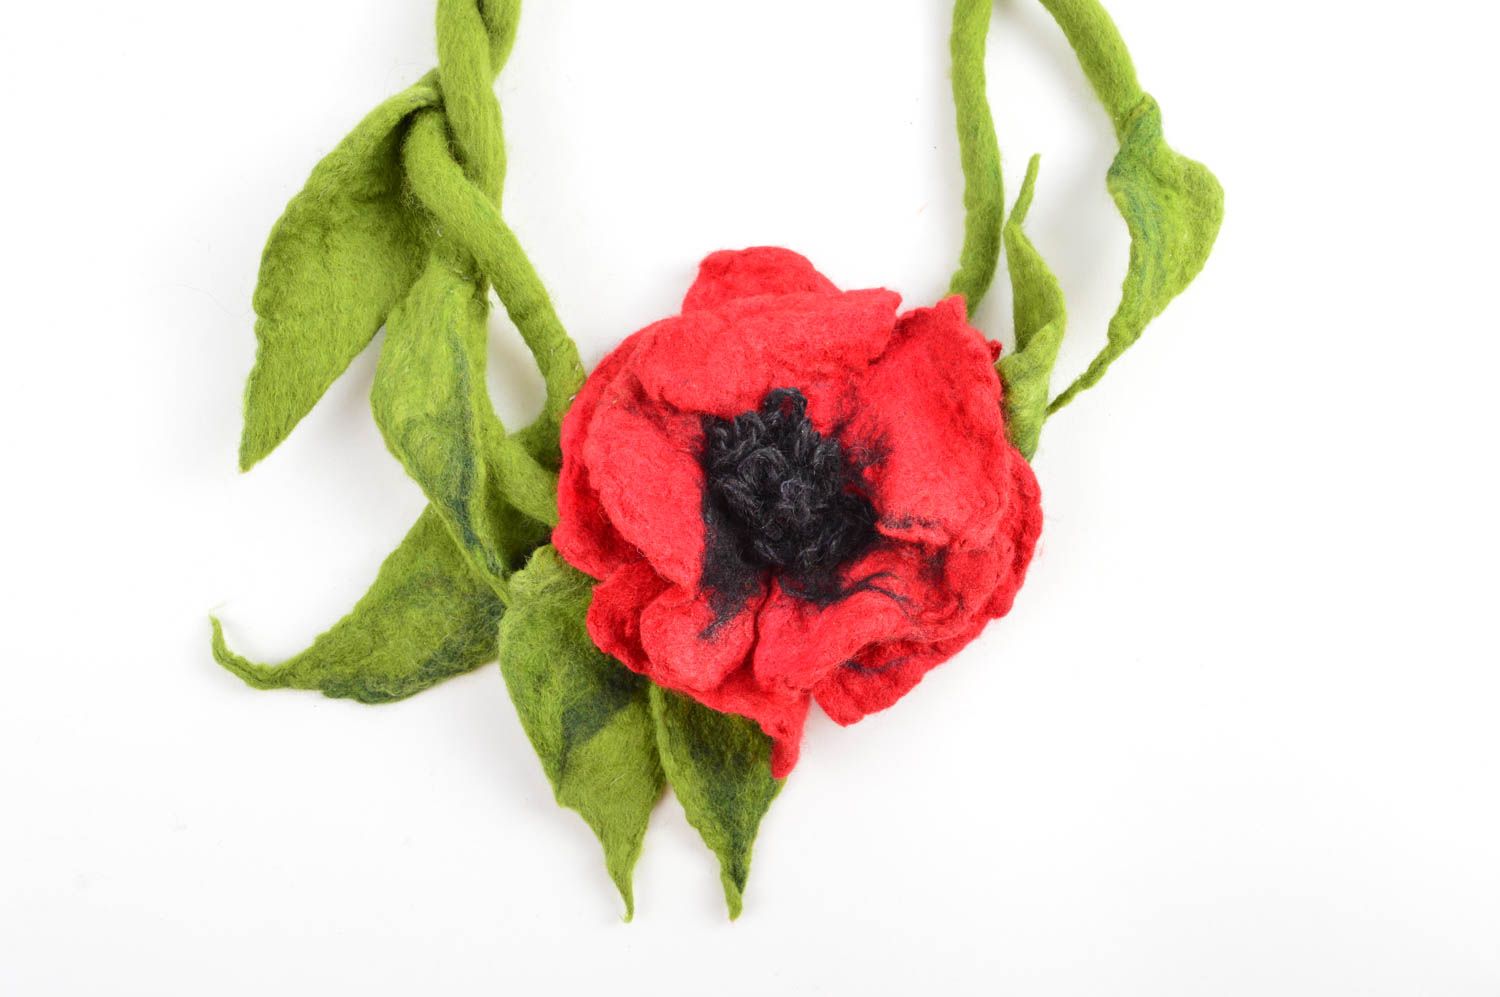 Designer necklace felted flower pendant handmade bijouterie unusual present photo 4